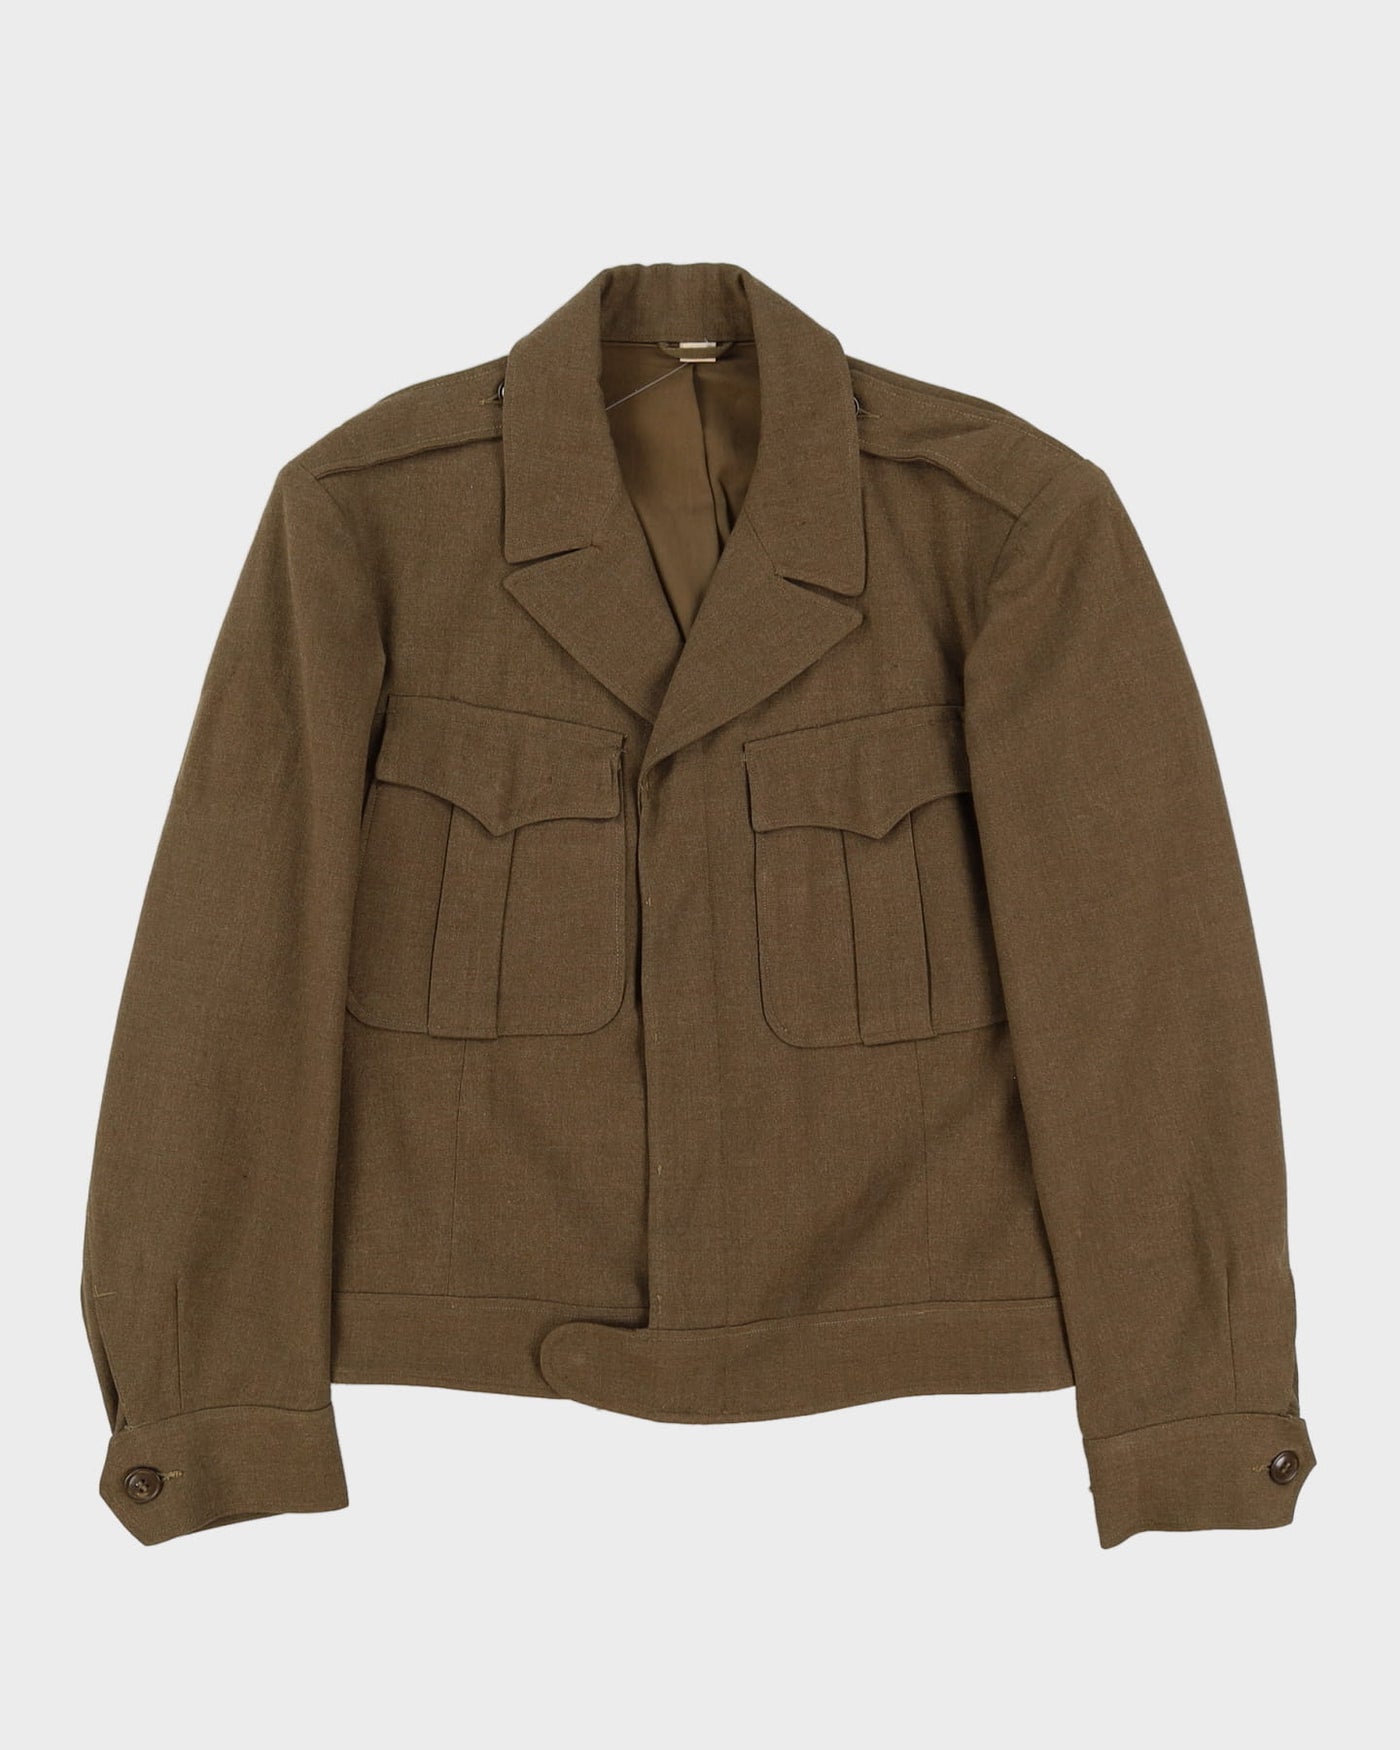 1944 Vintage US Army Wool Ike Jacket - Small